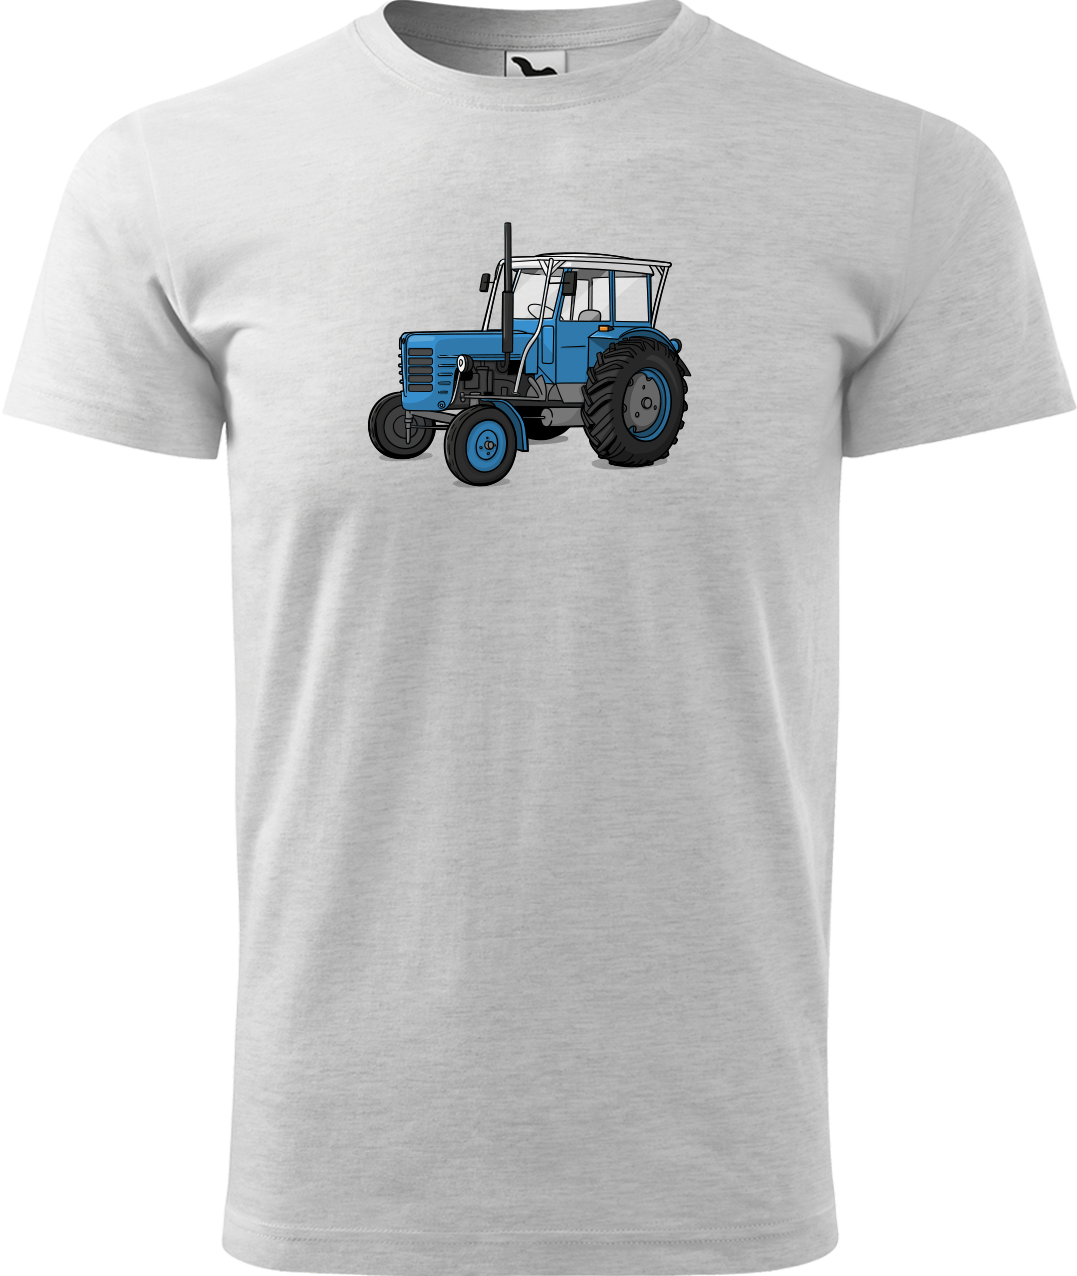 Tričko s traktorem - Starý traktor Velikost: XL, Barva: Světle šedý melír (03)